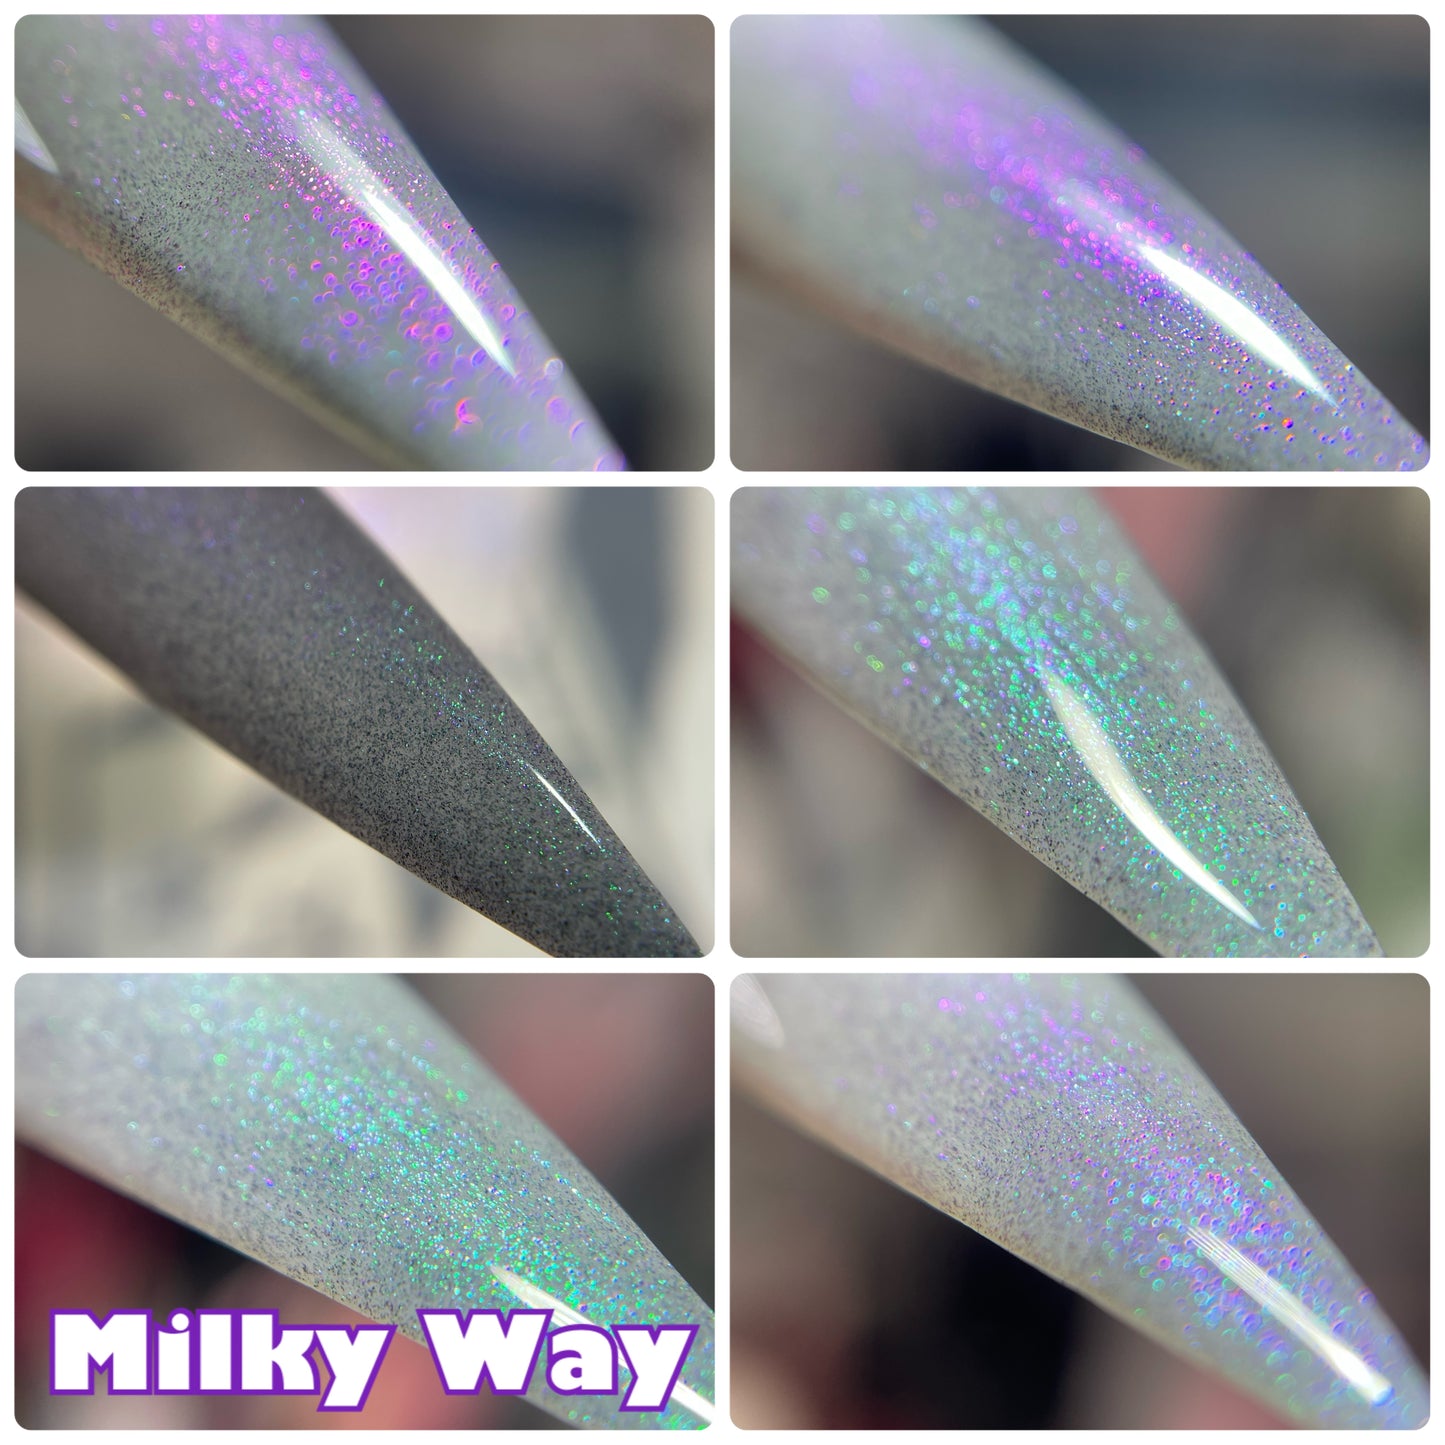 Milky Way - Multichrome Milk Exclusive